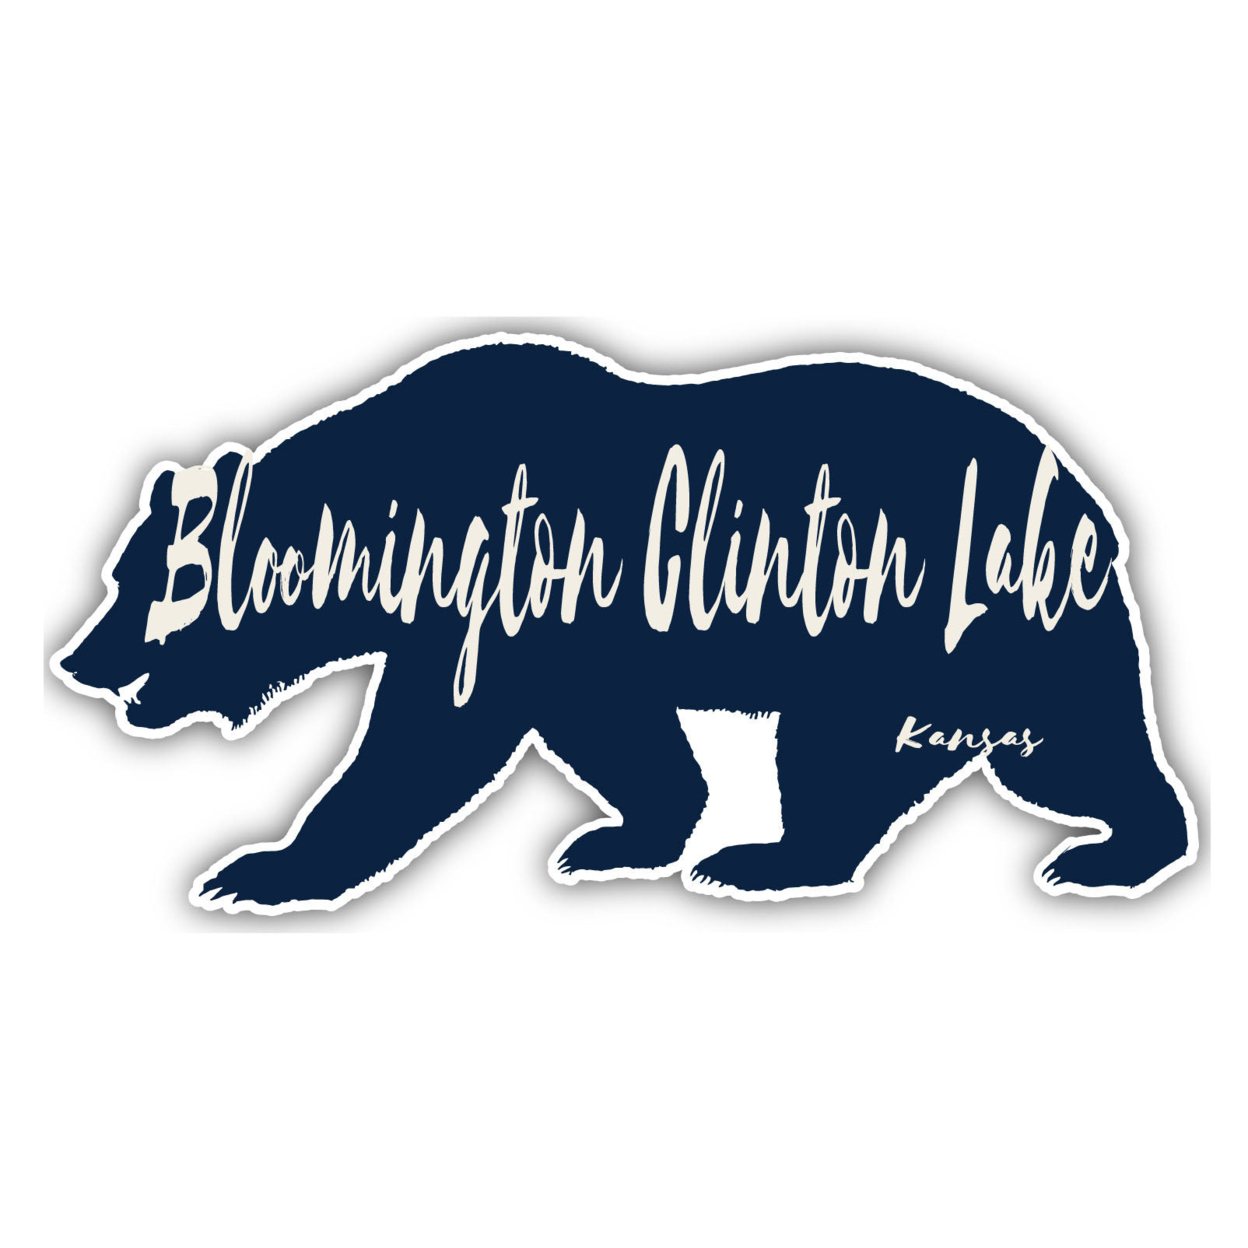 Bloomington Clinton Lake Kansas Souvenir Decorative Stickers (Choose Theme And Size) - 4-Pack, 12-Inch, Bear